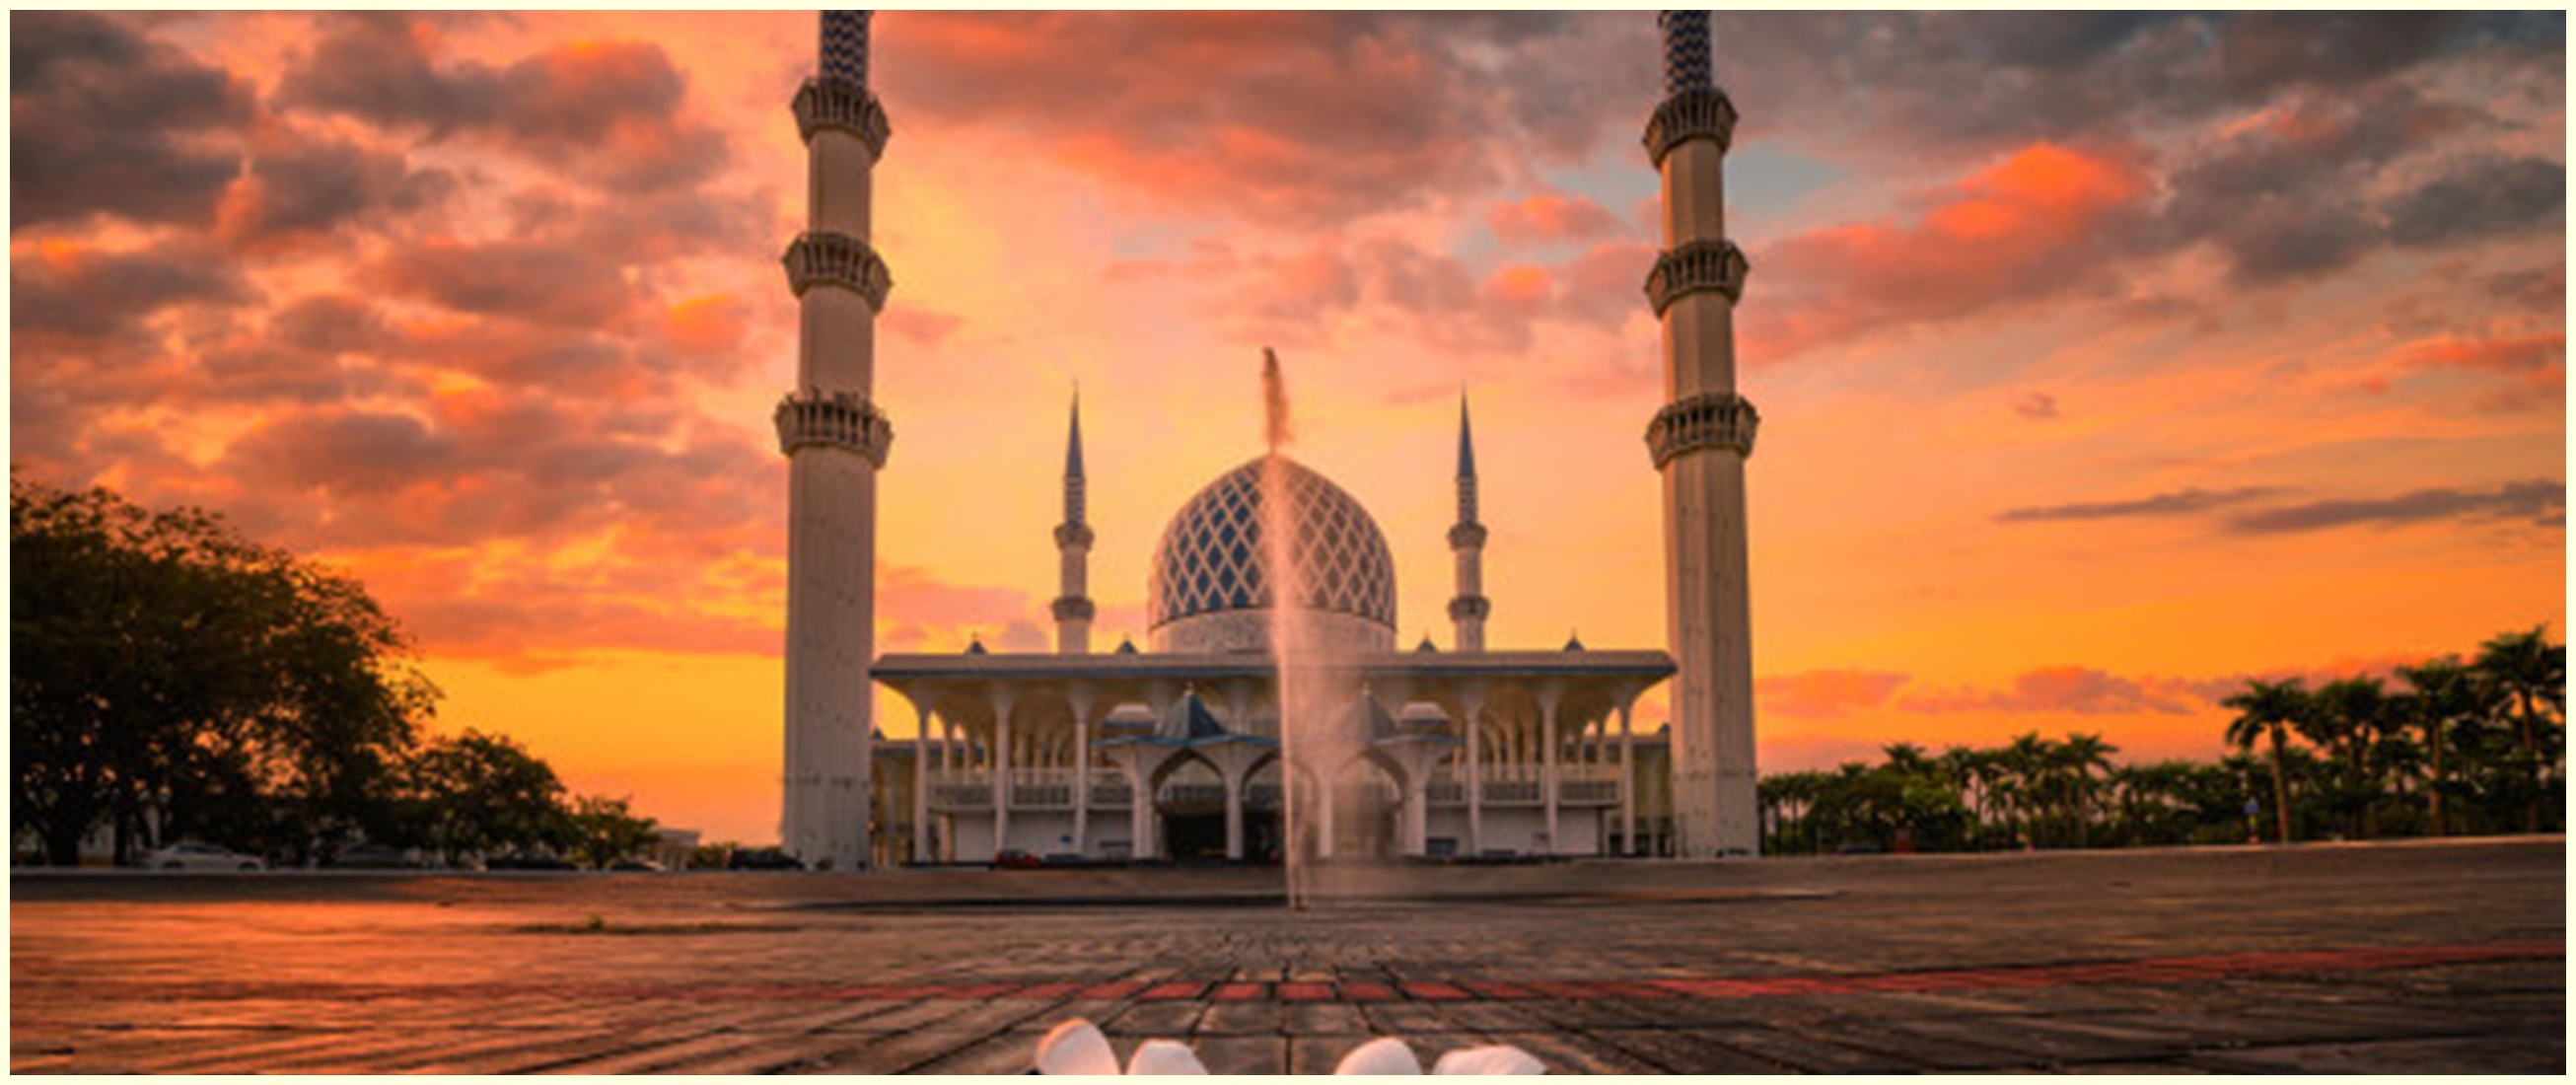 40 Caption tentang keindahan masjid, penuh makna dan menyejukkan